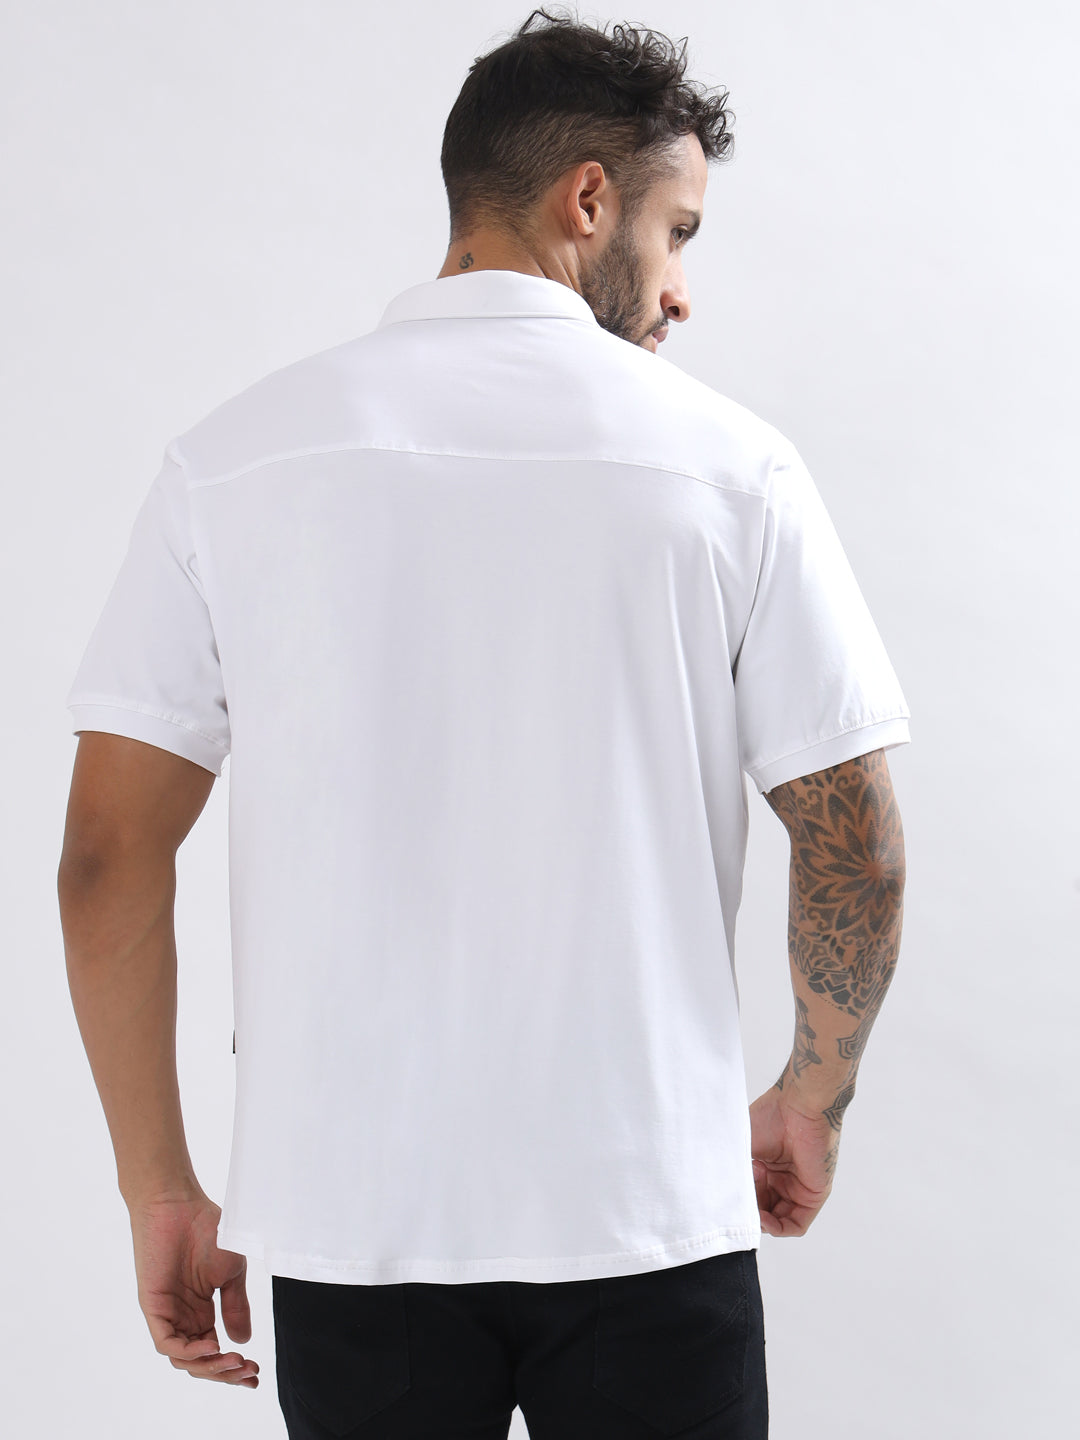 Noir White Shirt - Wearduds